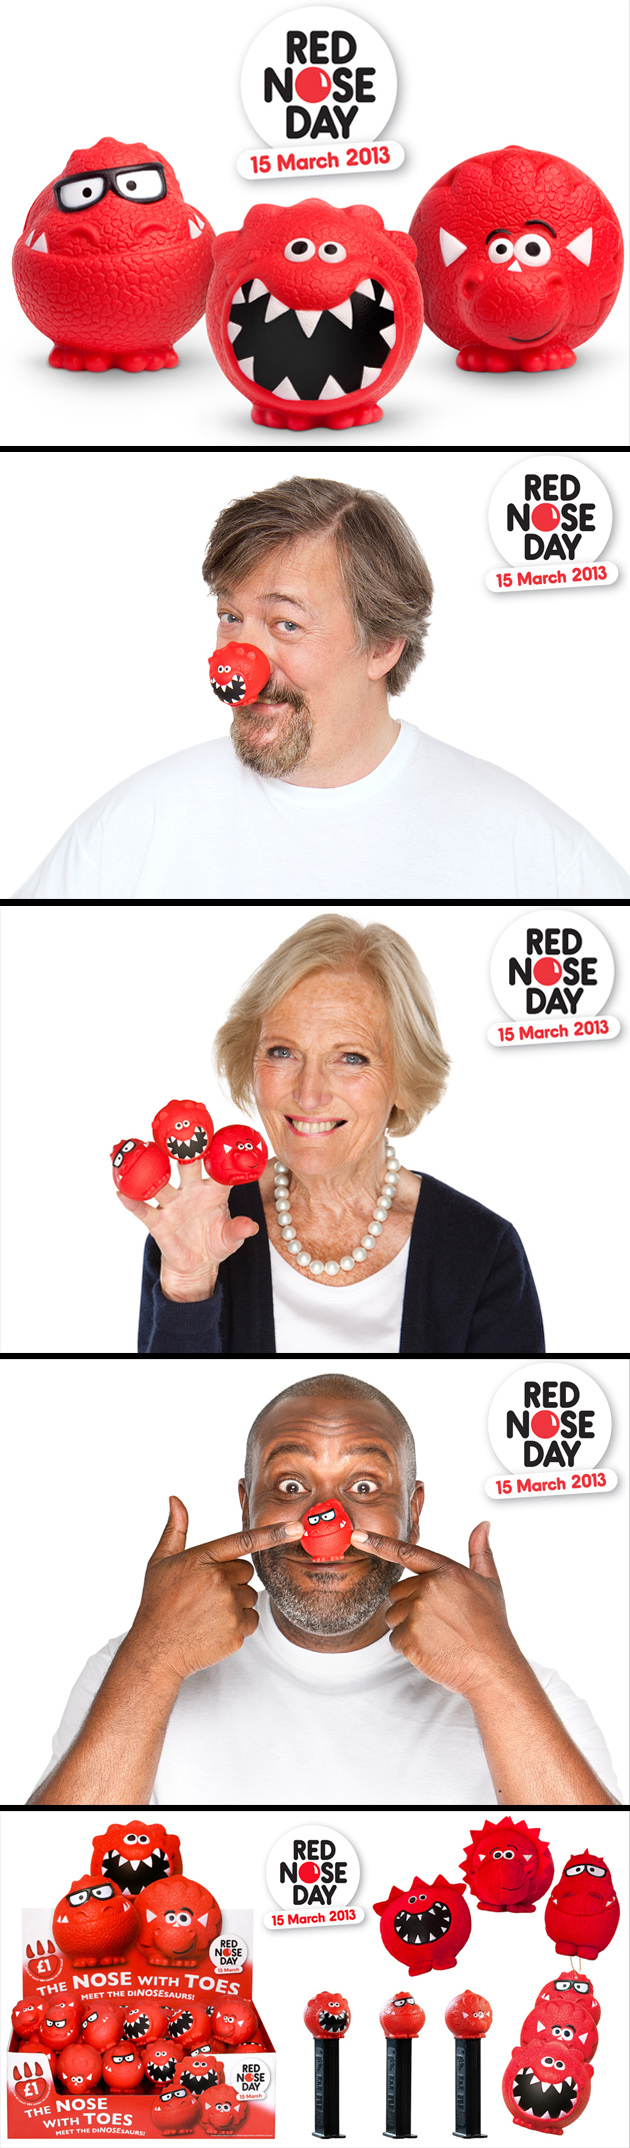 Tado / Comic Relief - Red Nose Day 2013